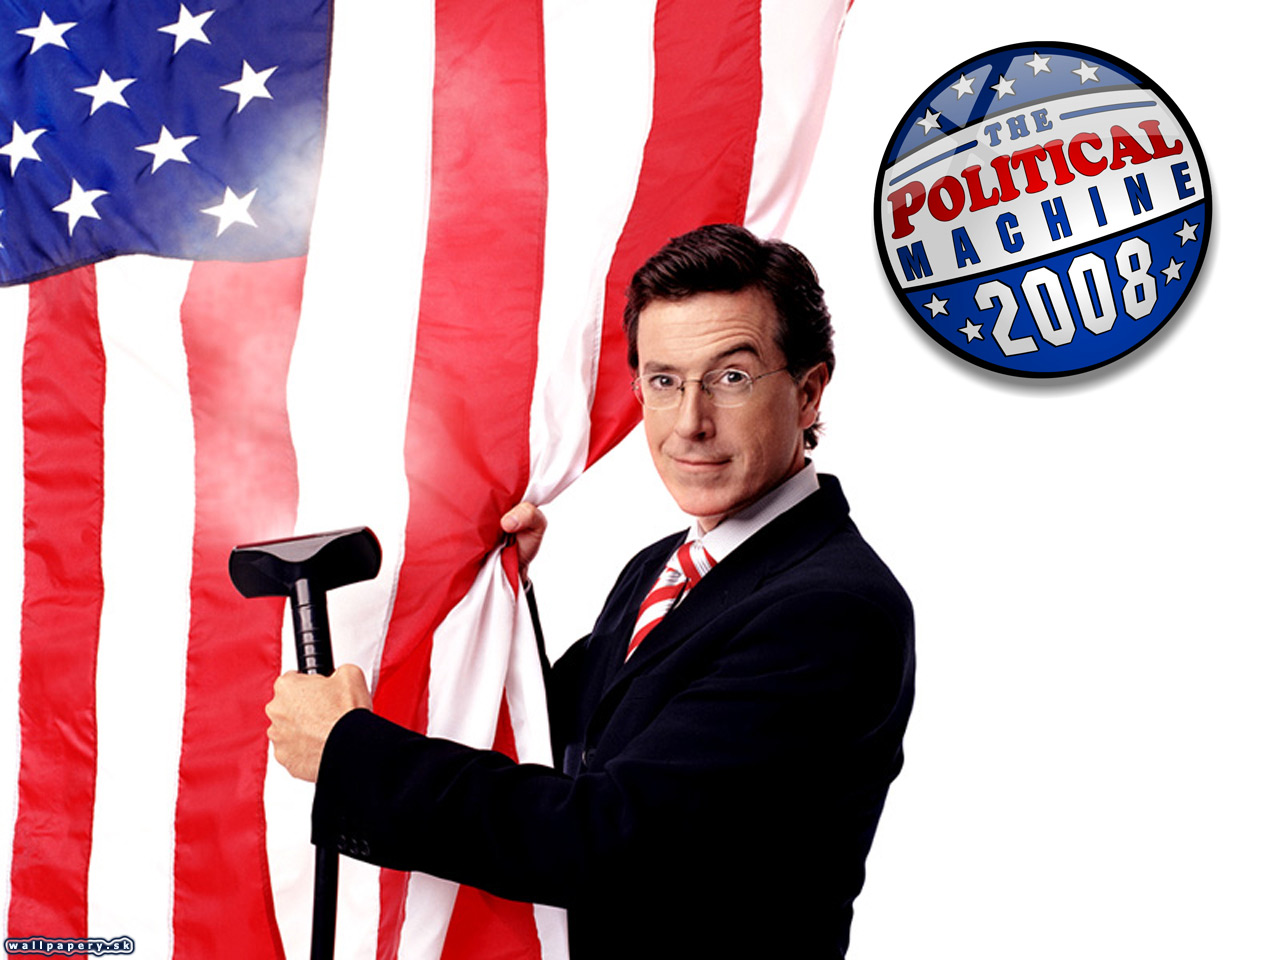 The Political Machine 2008 - wallpaper 4